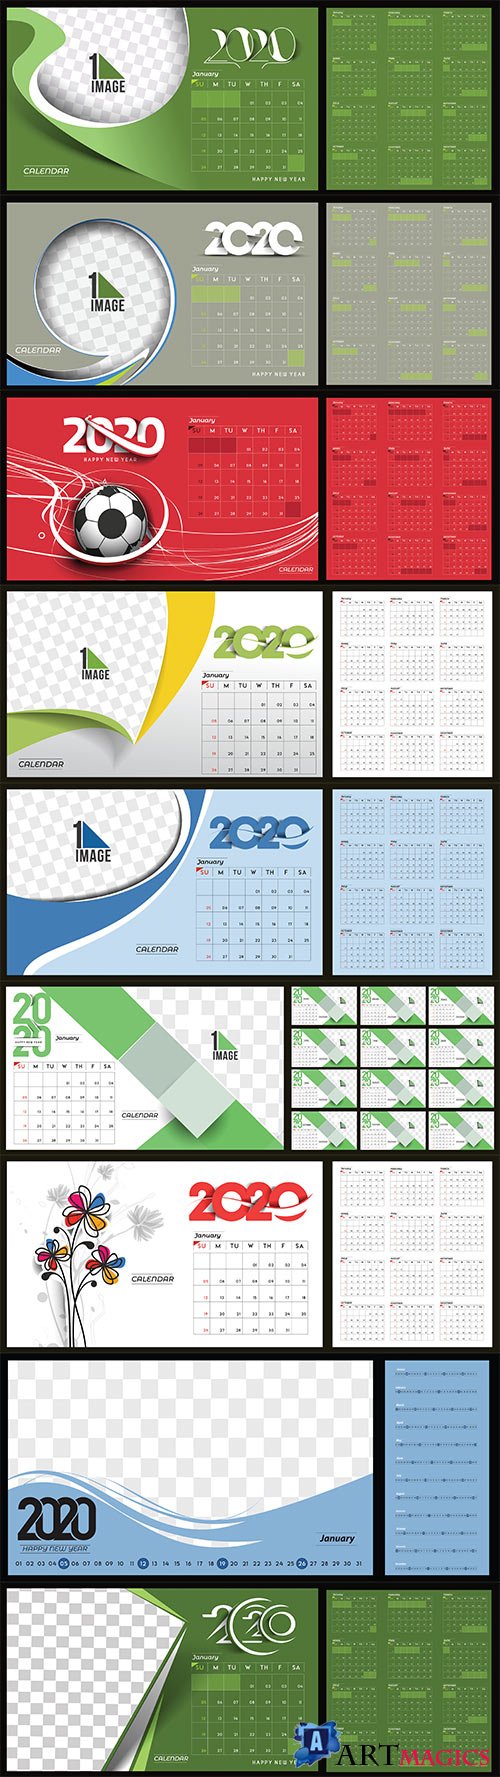 Happy new year 2020 Calendar vector illustration